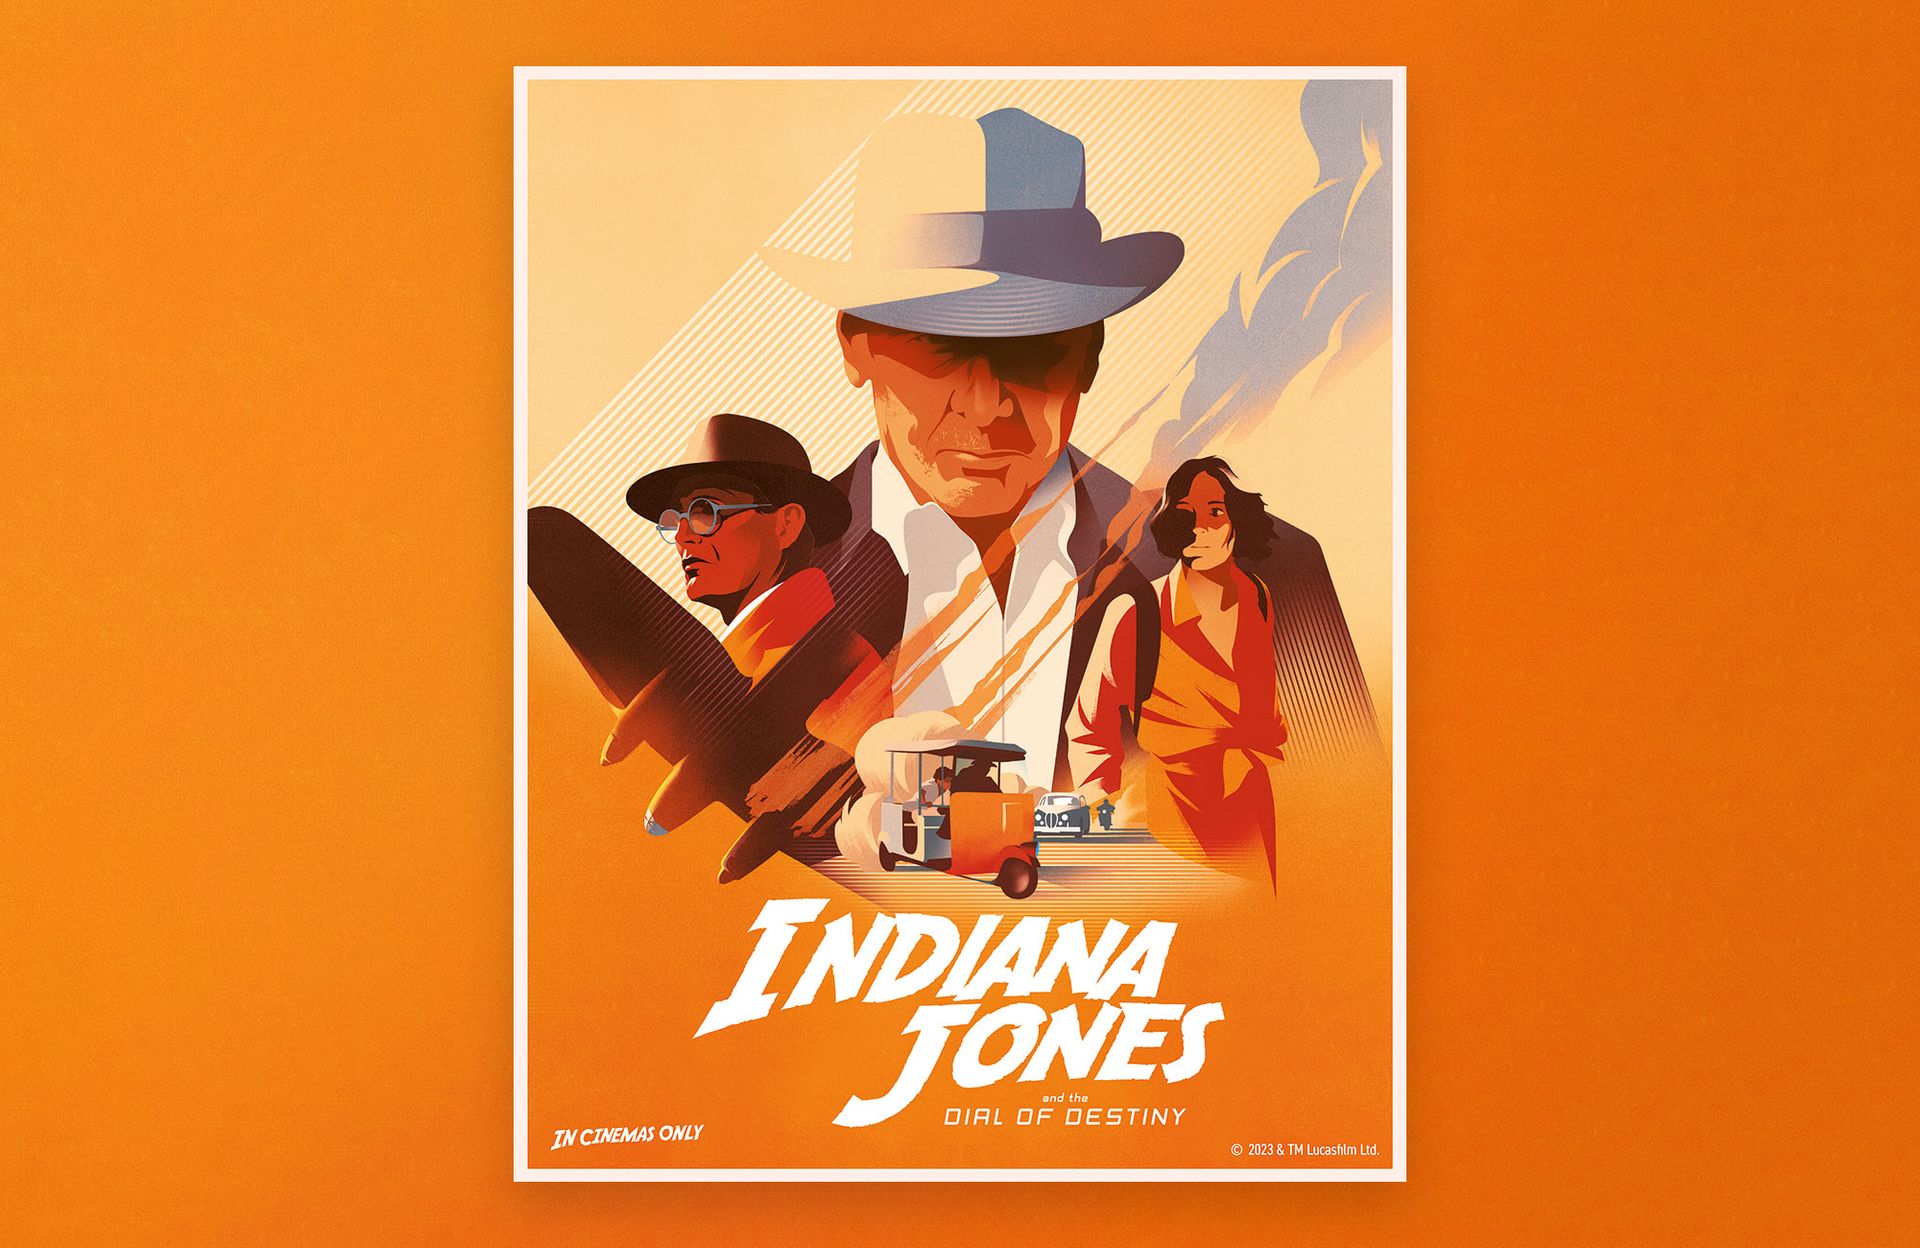 Indiana Jones - Dial of Destiny poster by Charlie Davis for Disney Studios UK